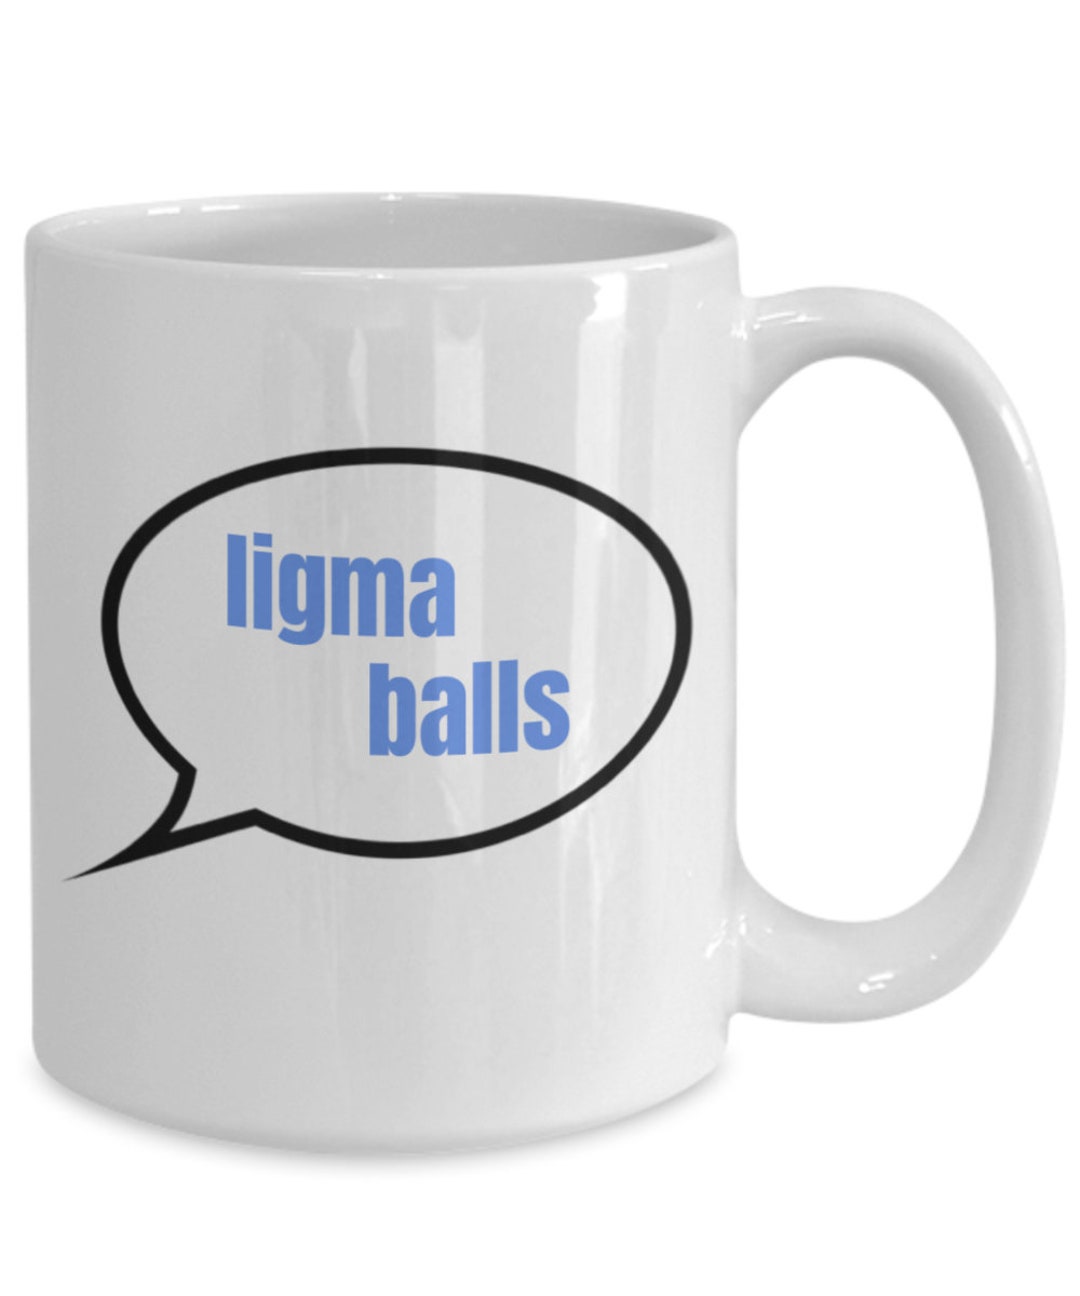 Ligma balls : r/Ligma